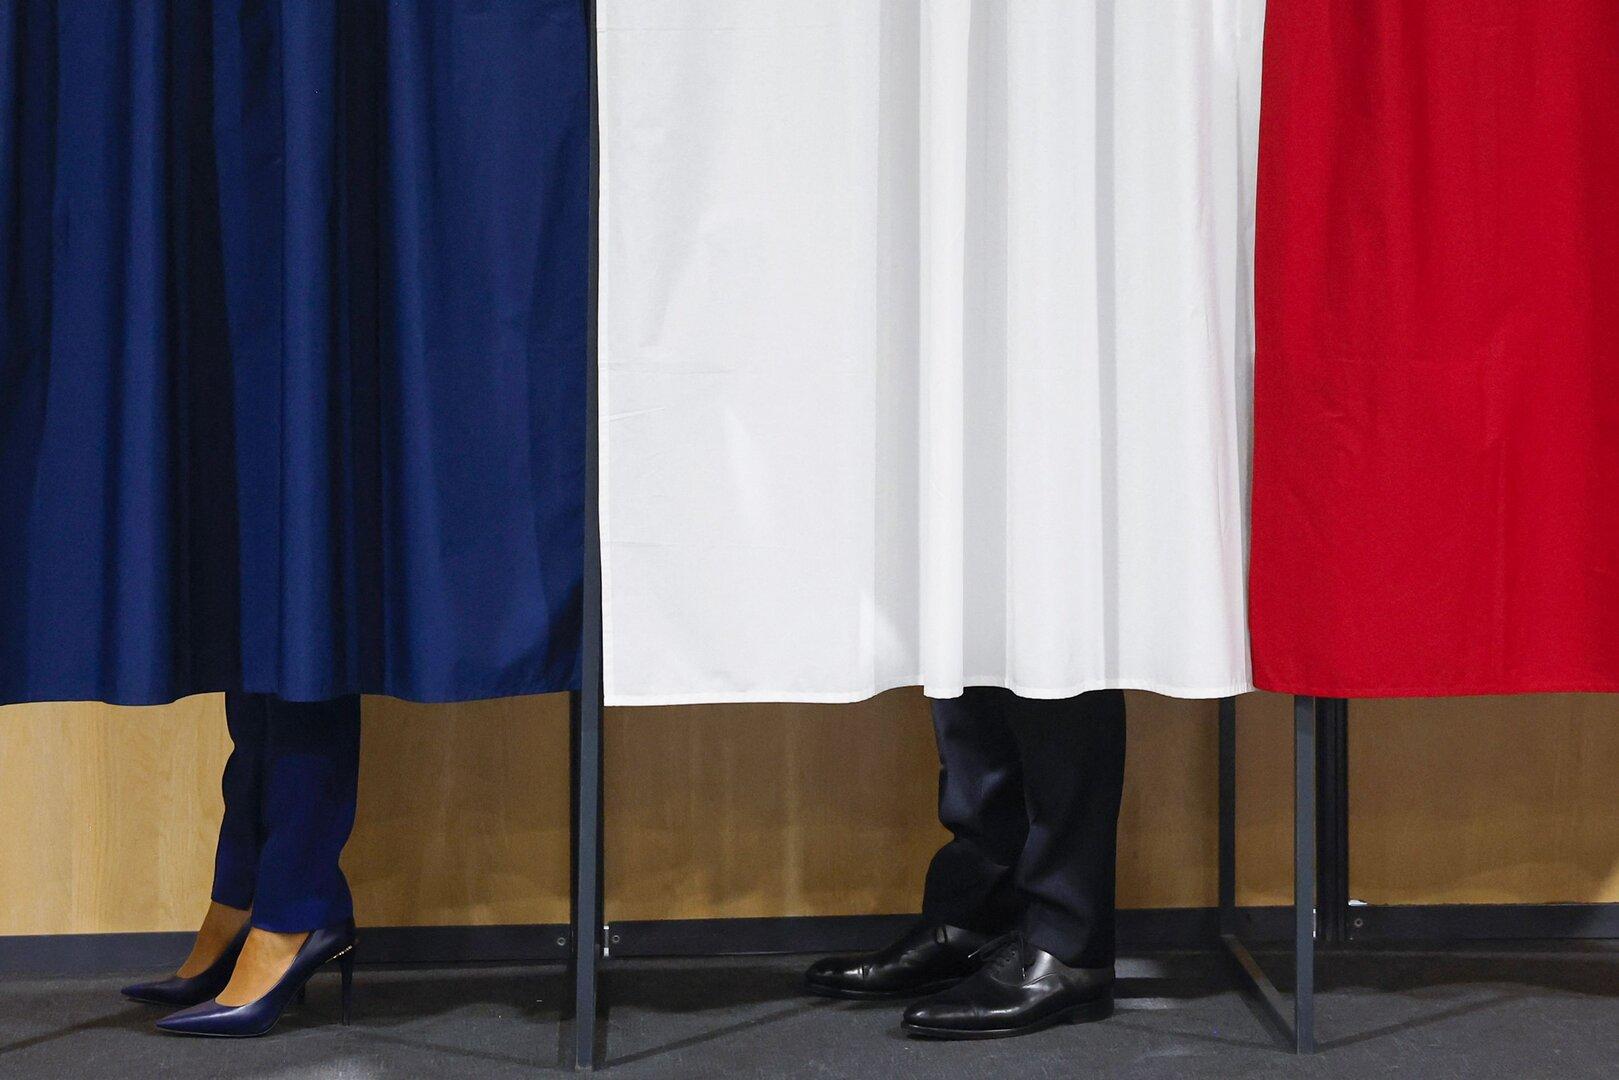 Hohe Wahlbeteiligung: Großes Interesse an Frankreich-Wahl